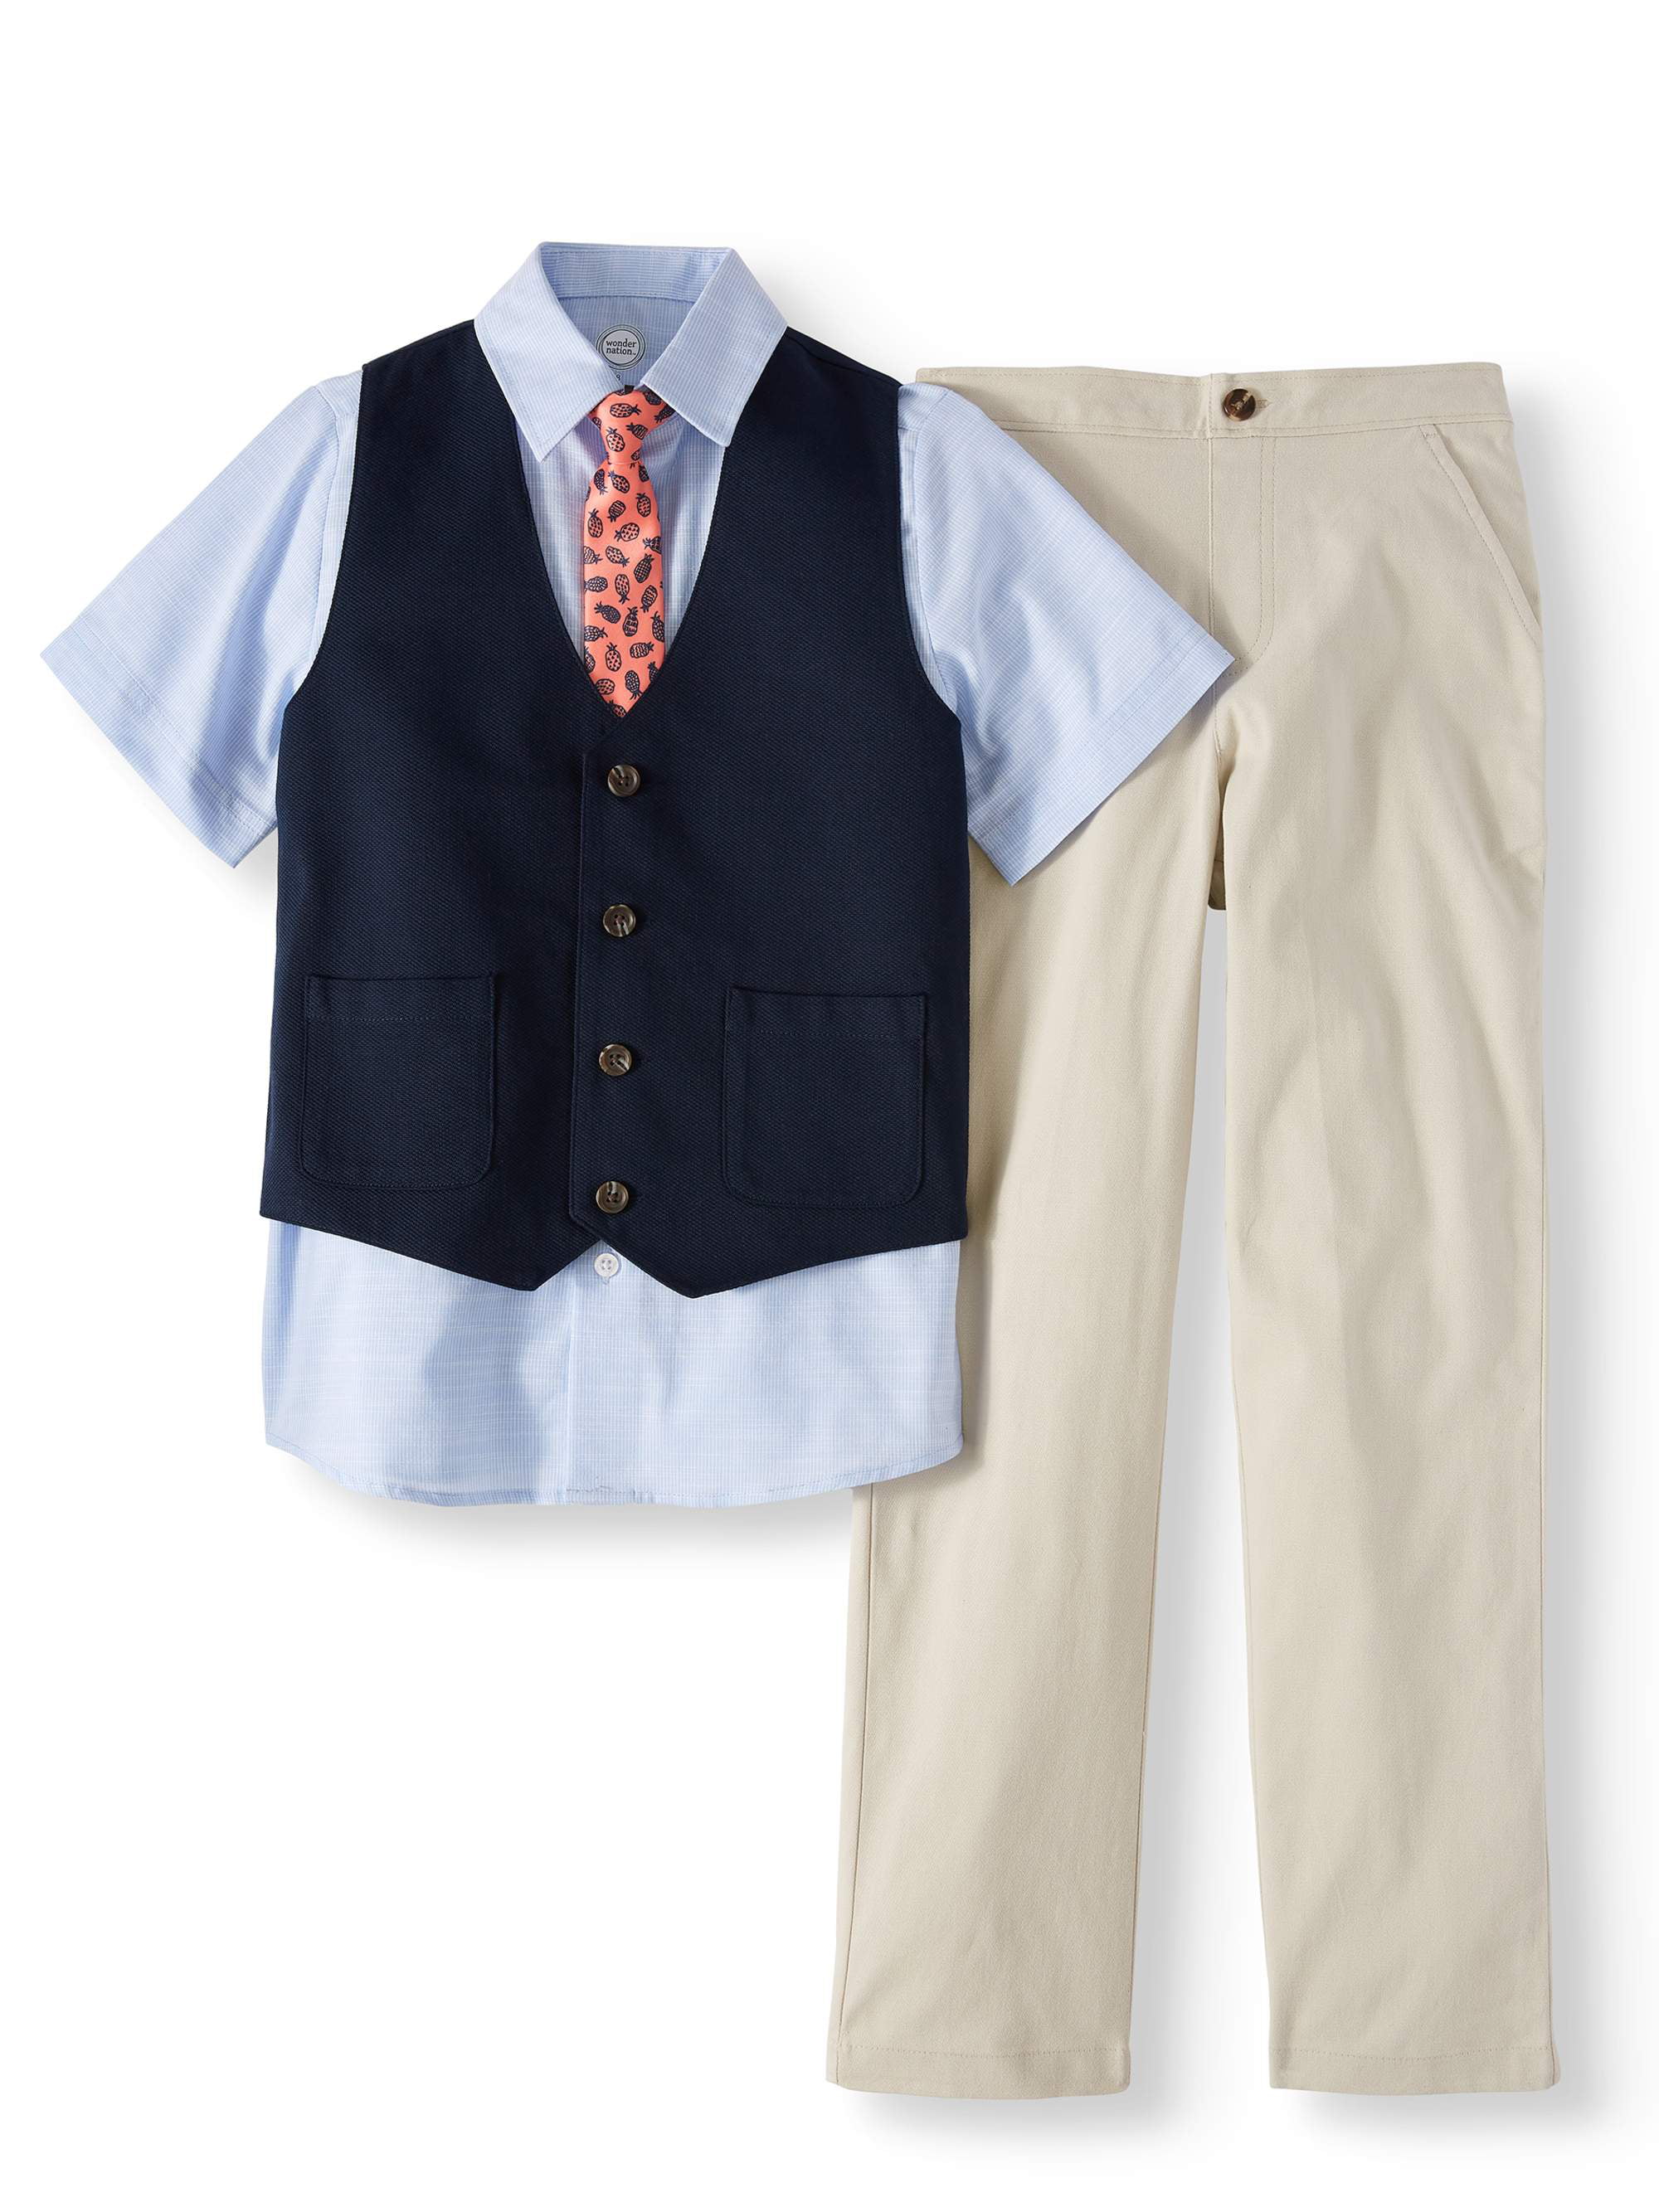 Wonder nation boys Suit set with Vest Button-up Shirt tie and dress Pants 8 